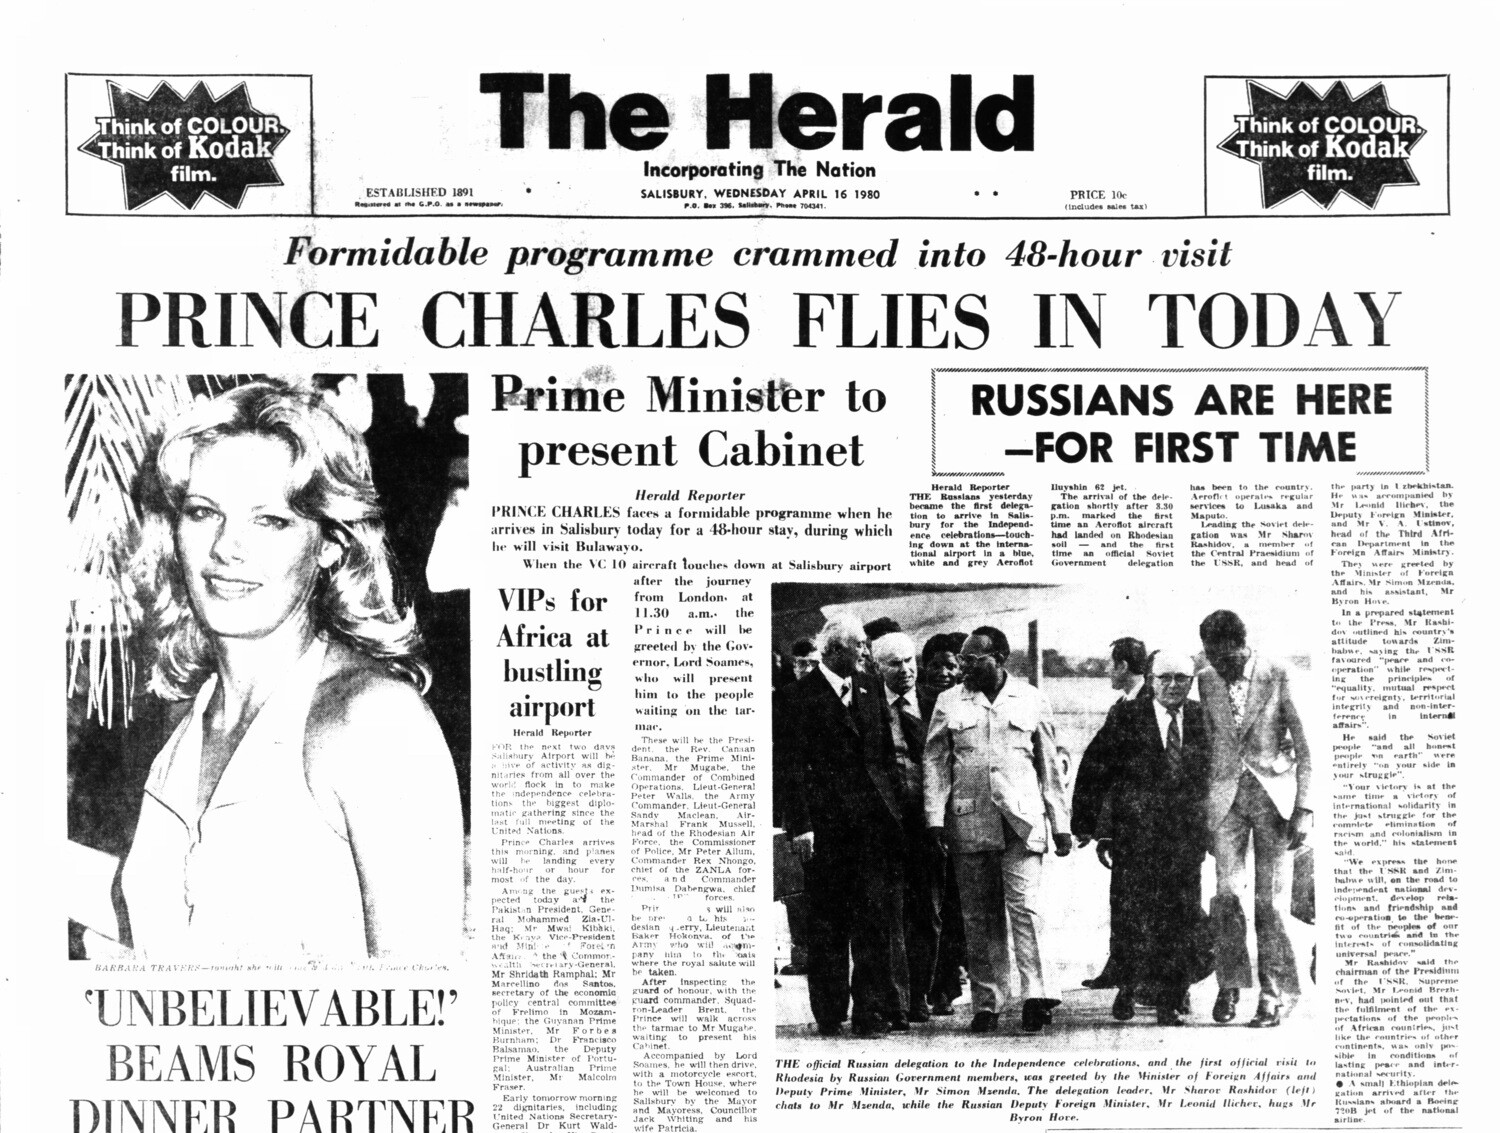 The Herald - 16 April 1980